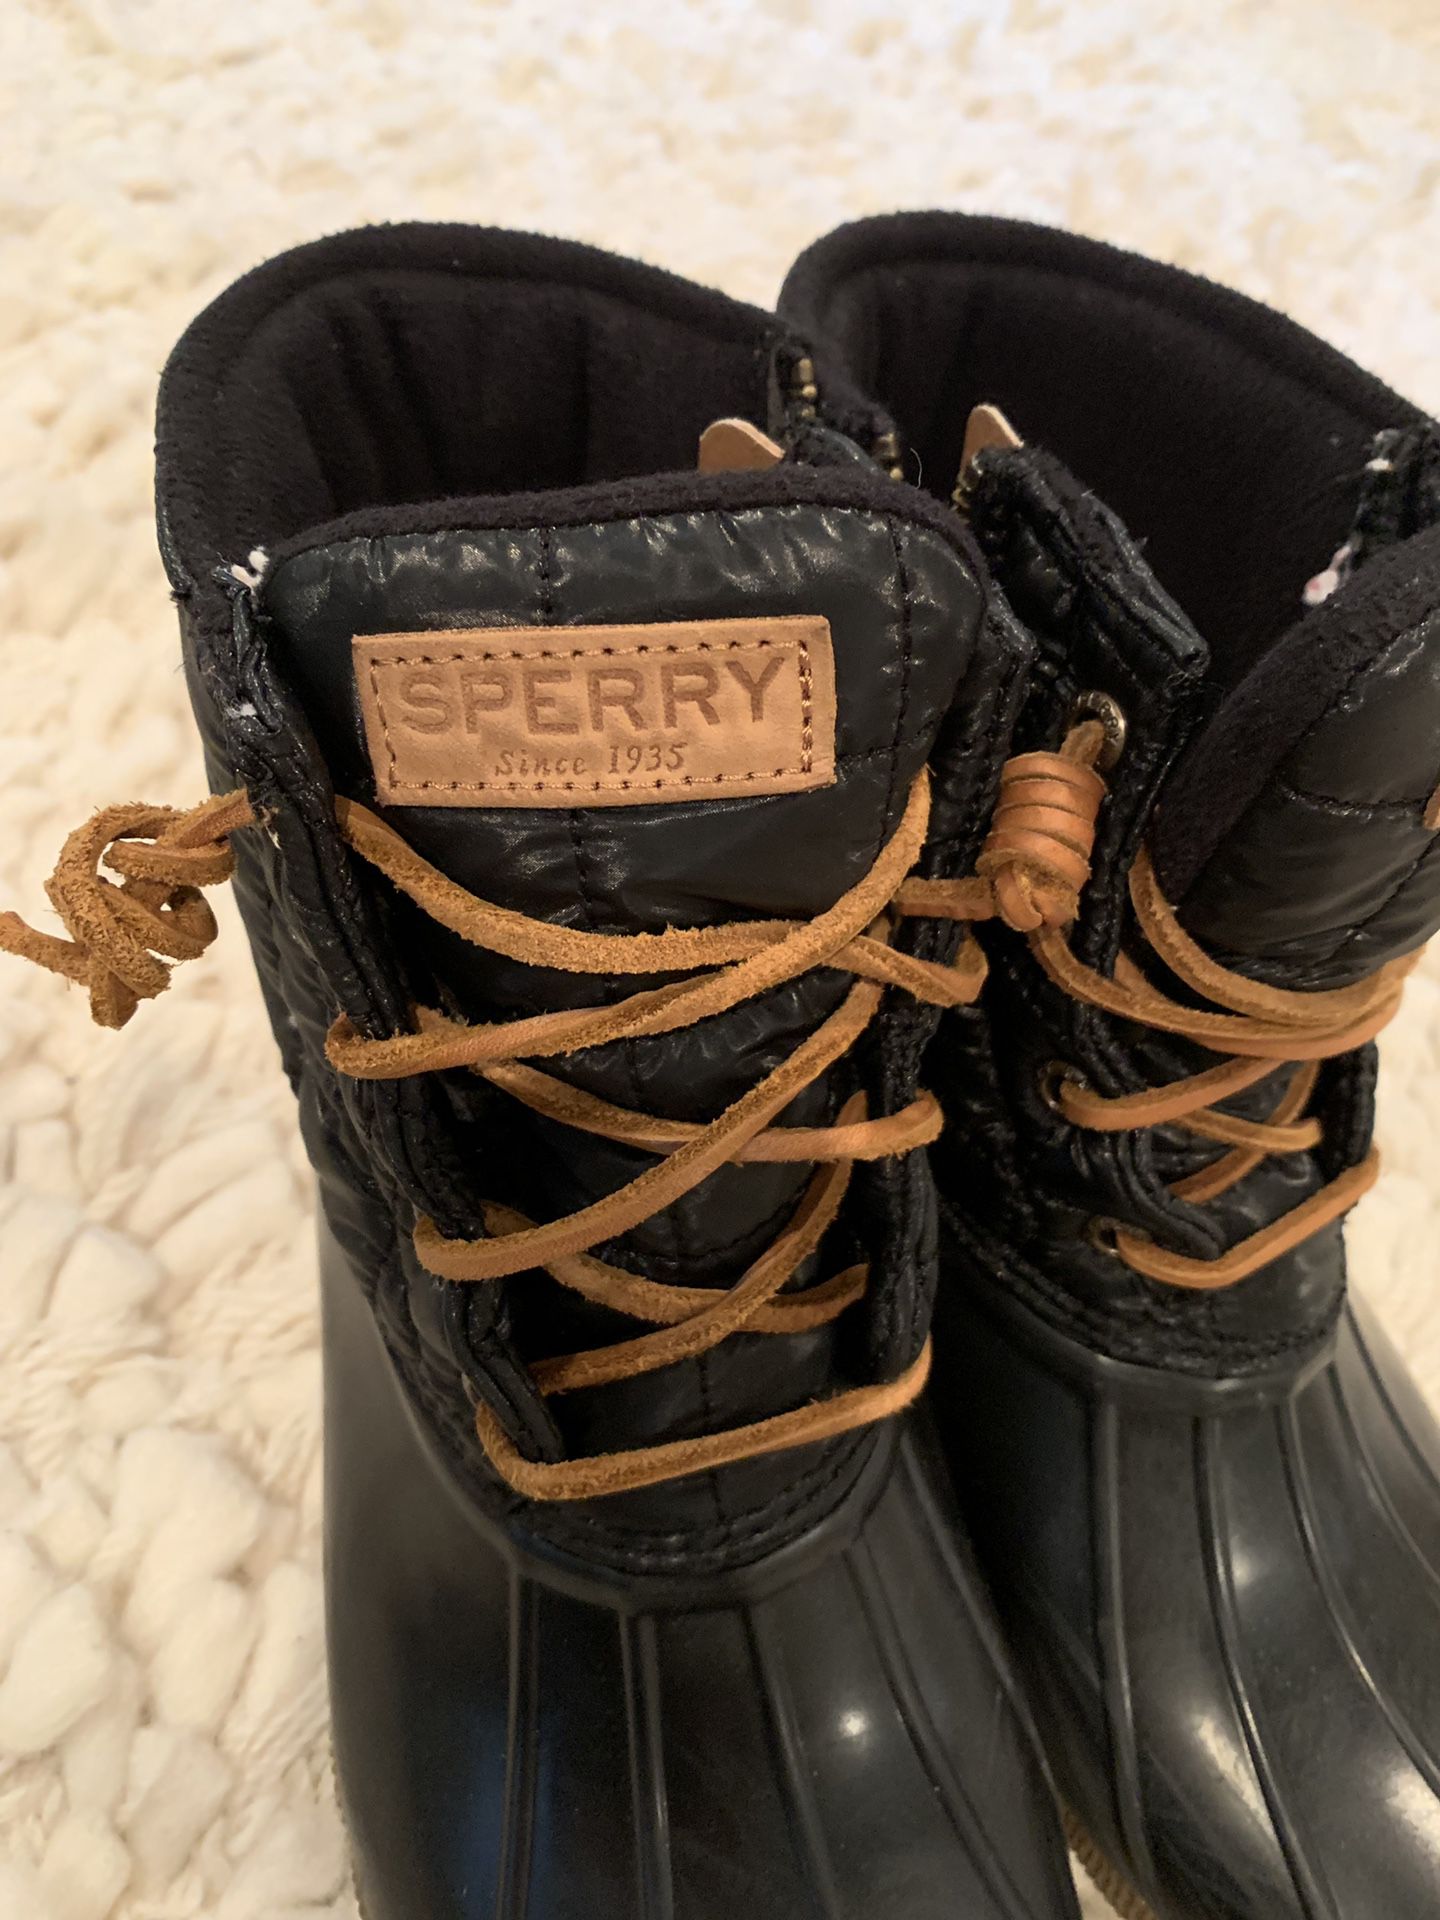 Sperry black boots Women’s 8.5